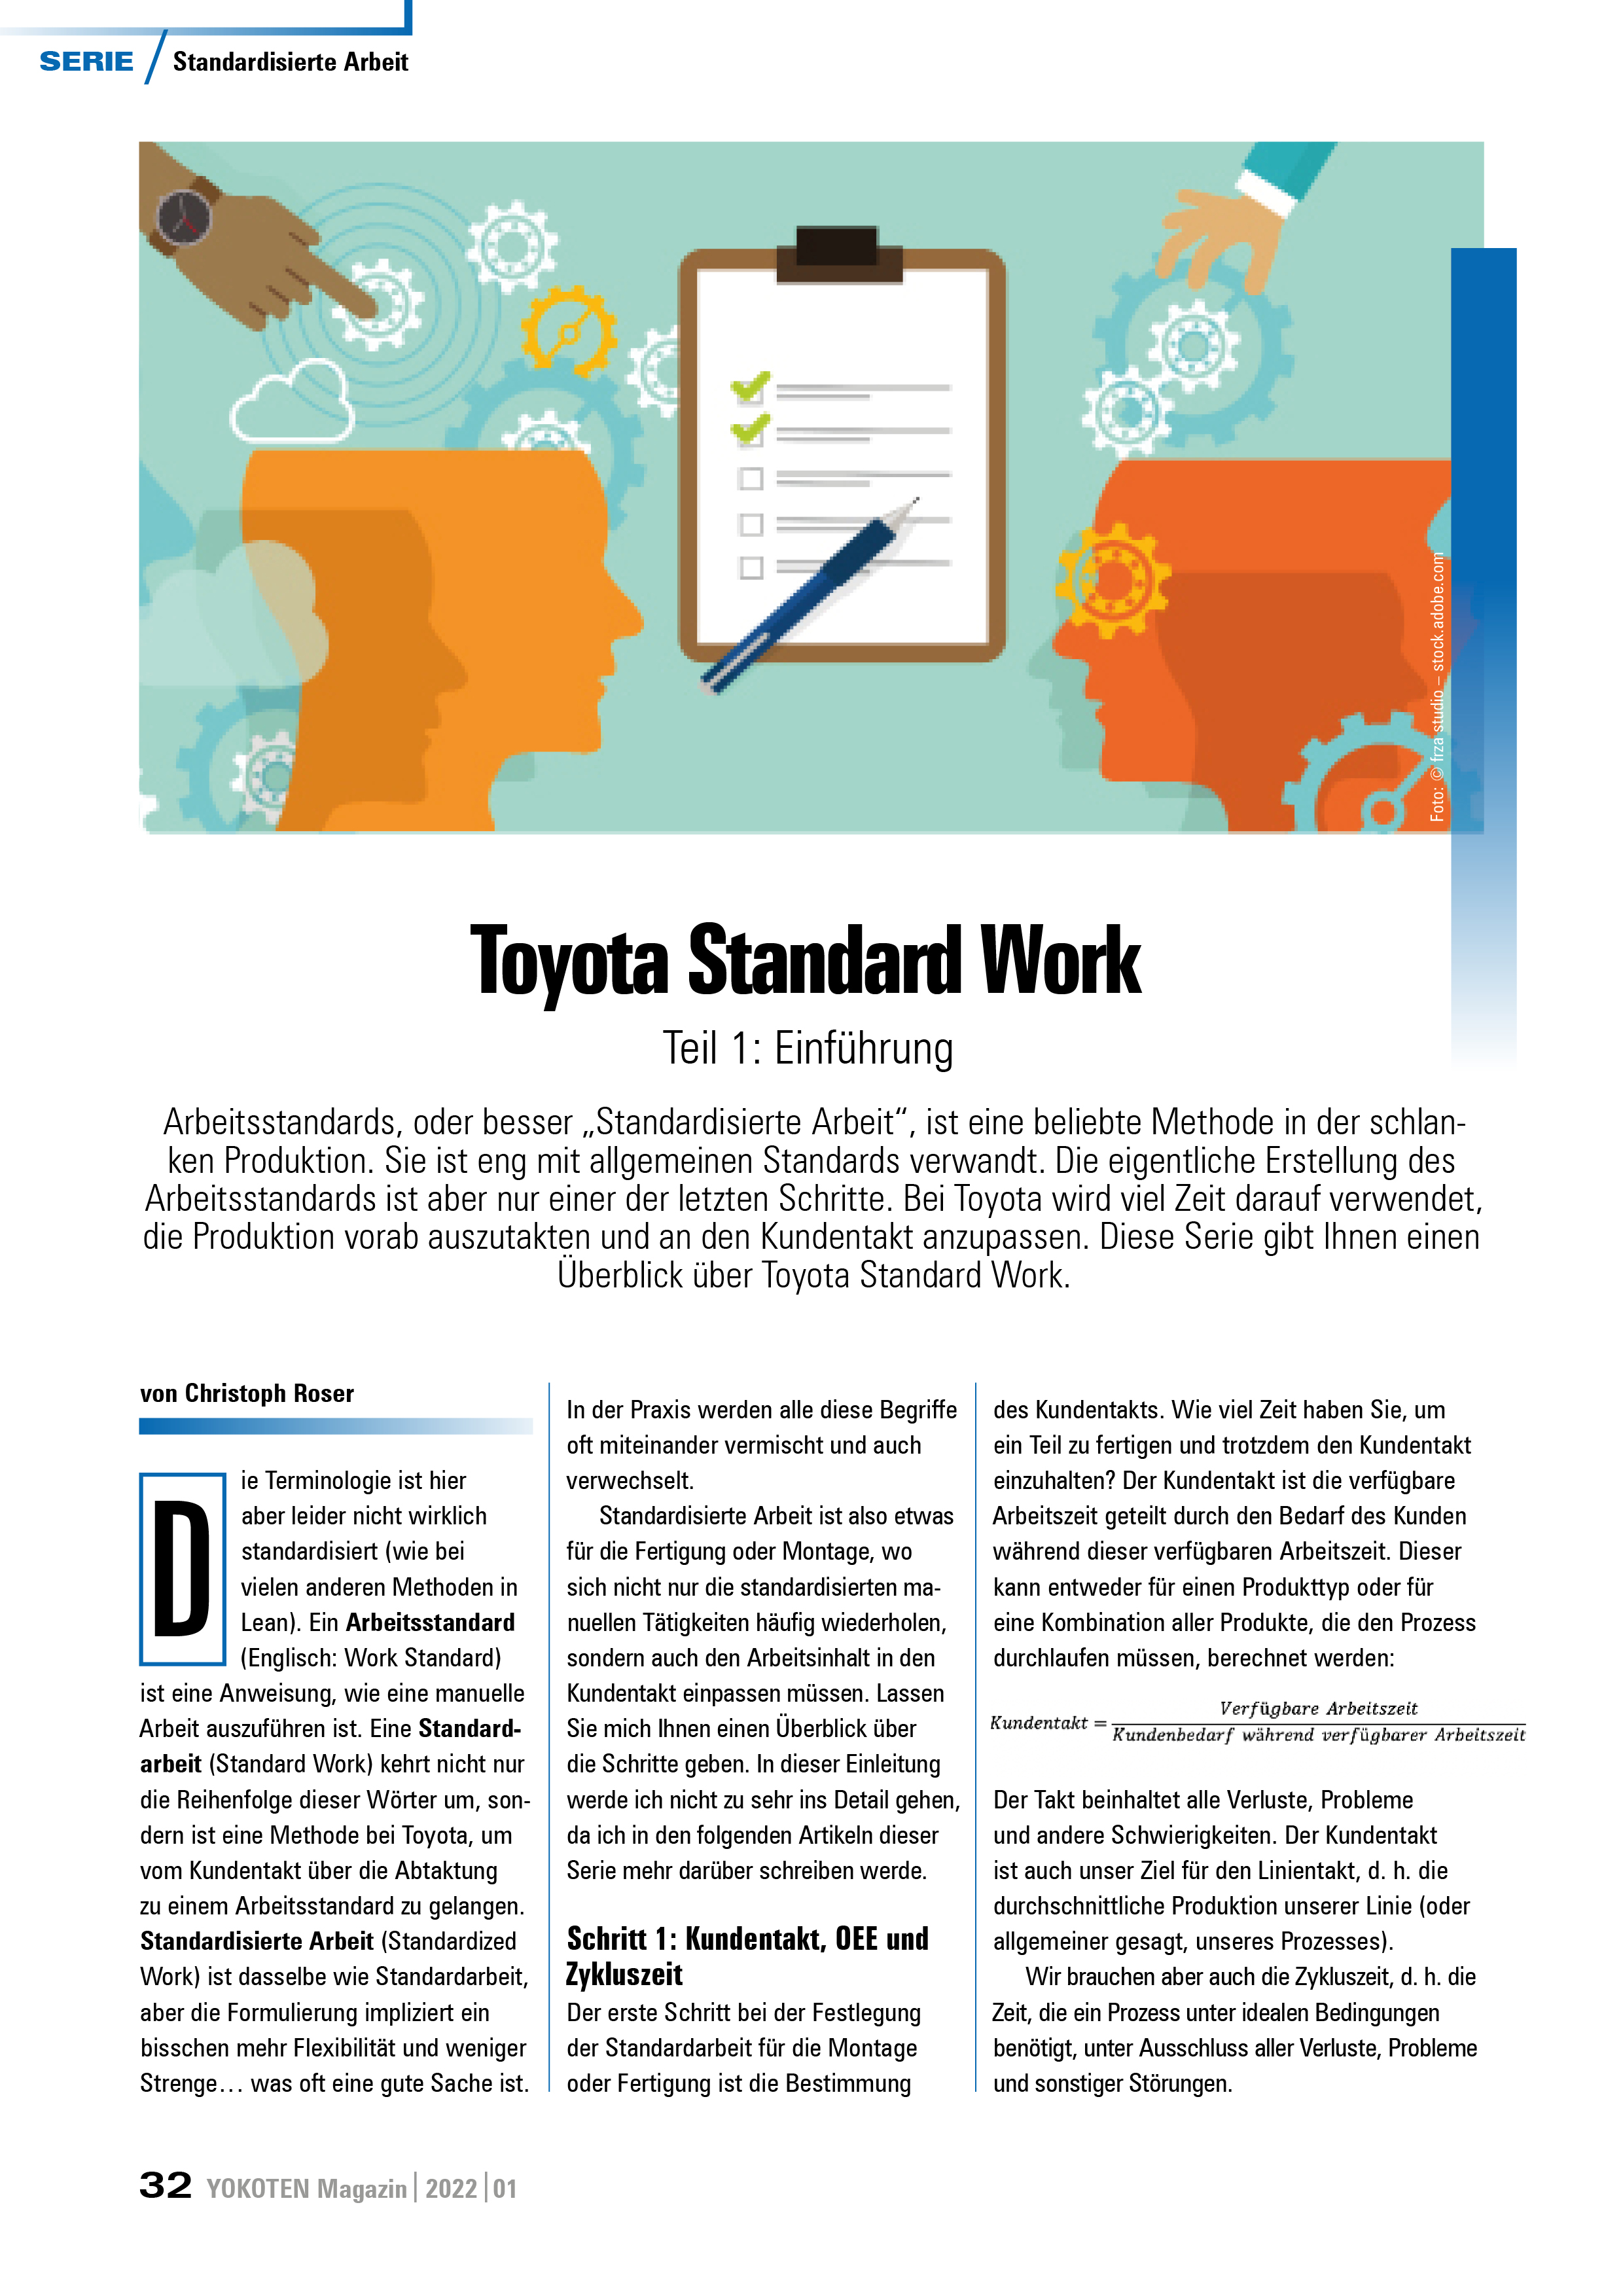 Toyota Standard Work - Artikel aus Fachmagazin YOKOTEN 2022-01